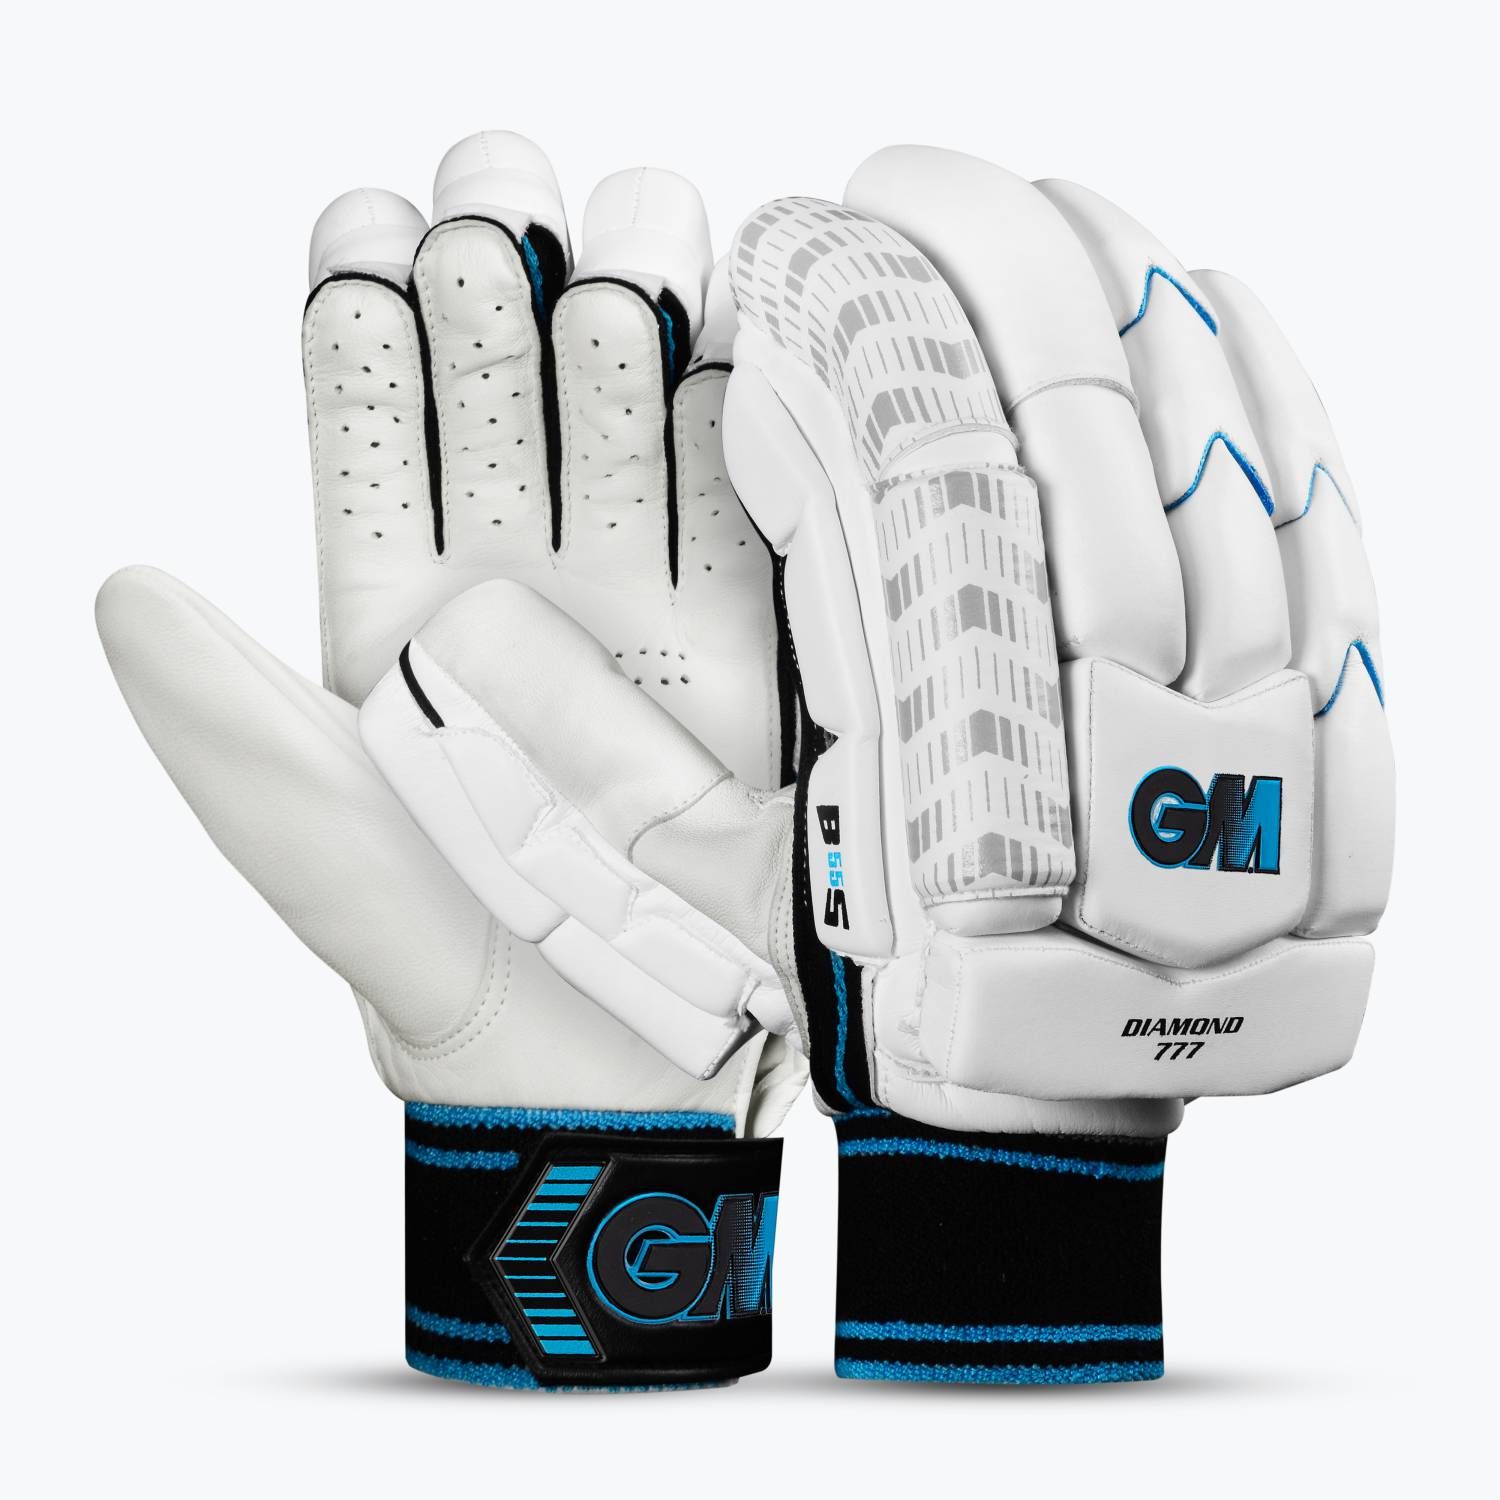 Diamond 777 Batting Gloves